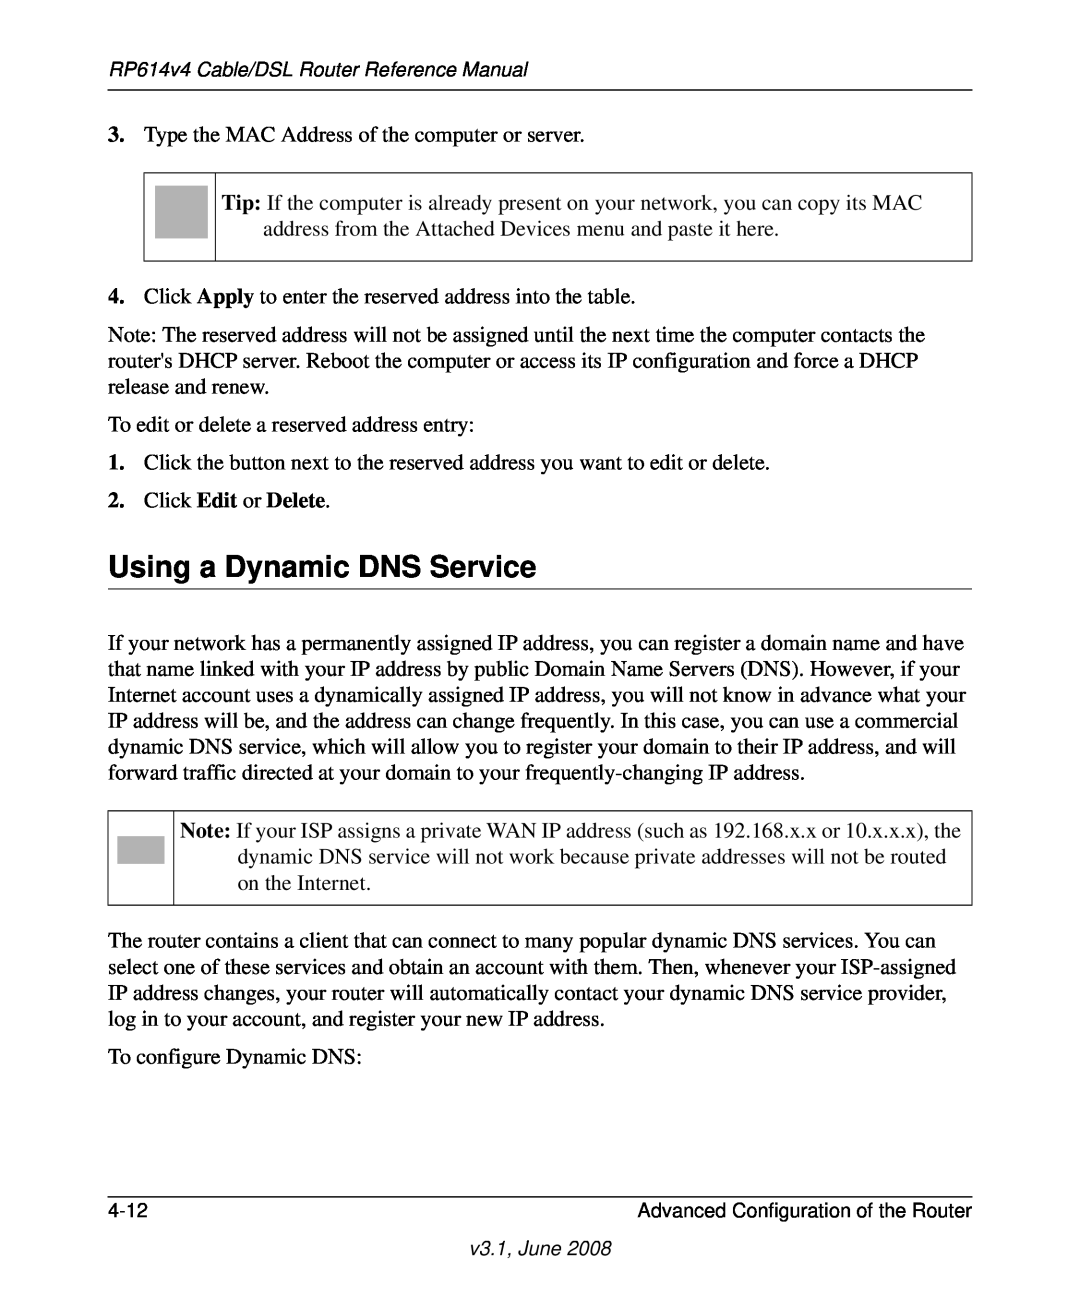 NETGEAR RP614 v4 manual Using a Dynamic DNS Service, Click Edit or Delete 